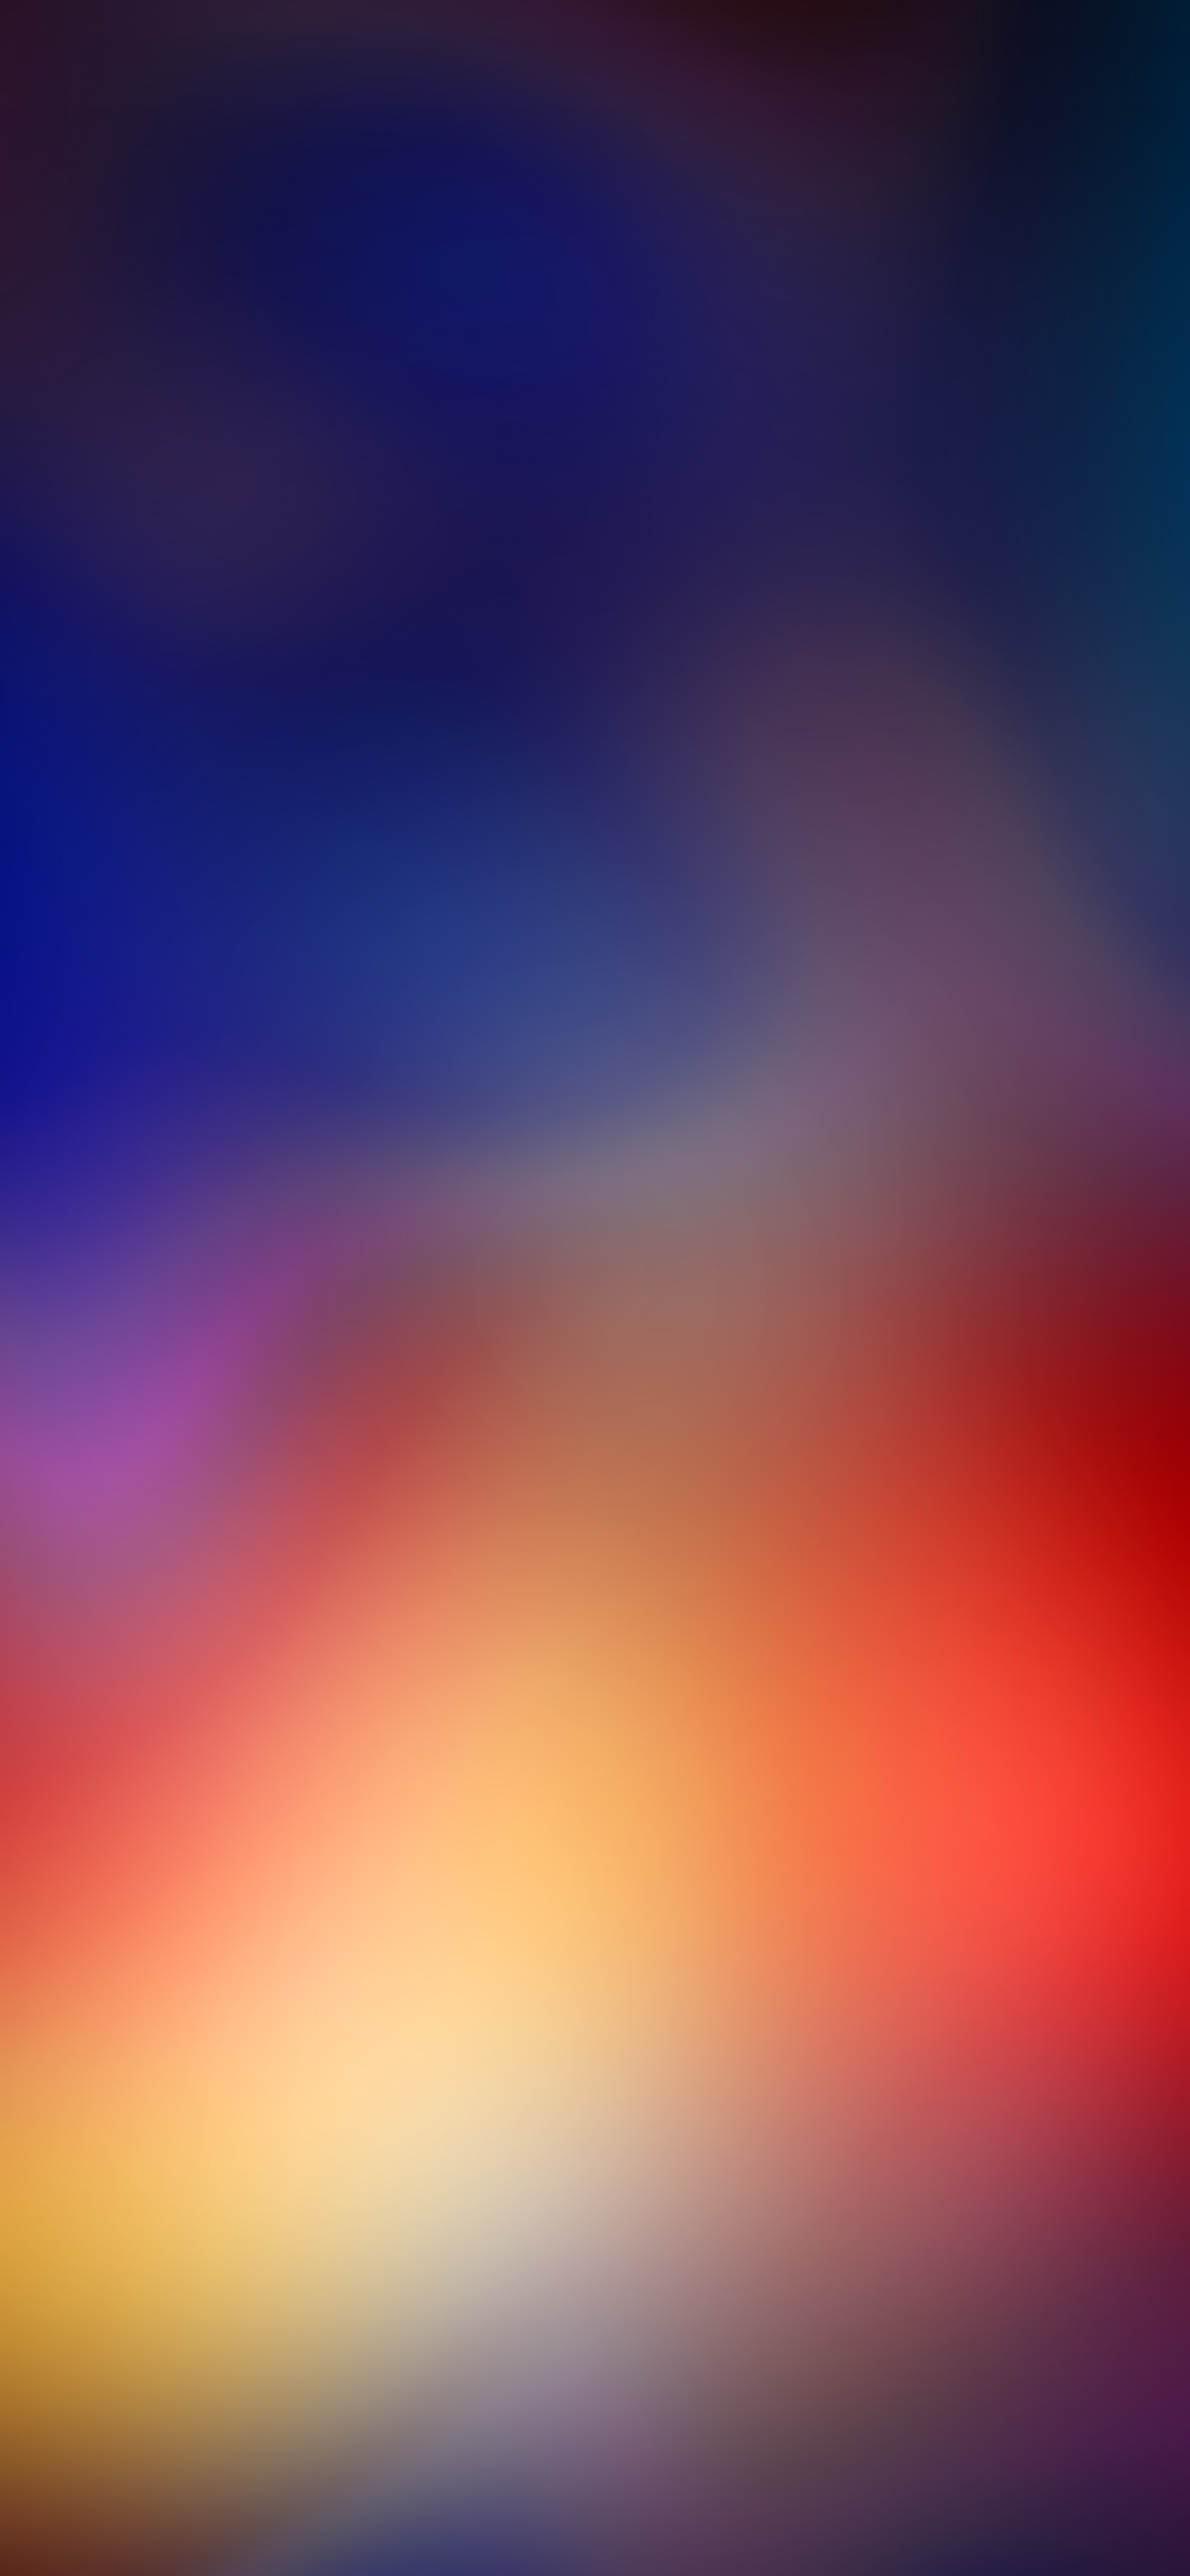 General 2250x4872 iPhone iOS iPad iPod portrait display gradient